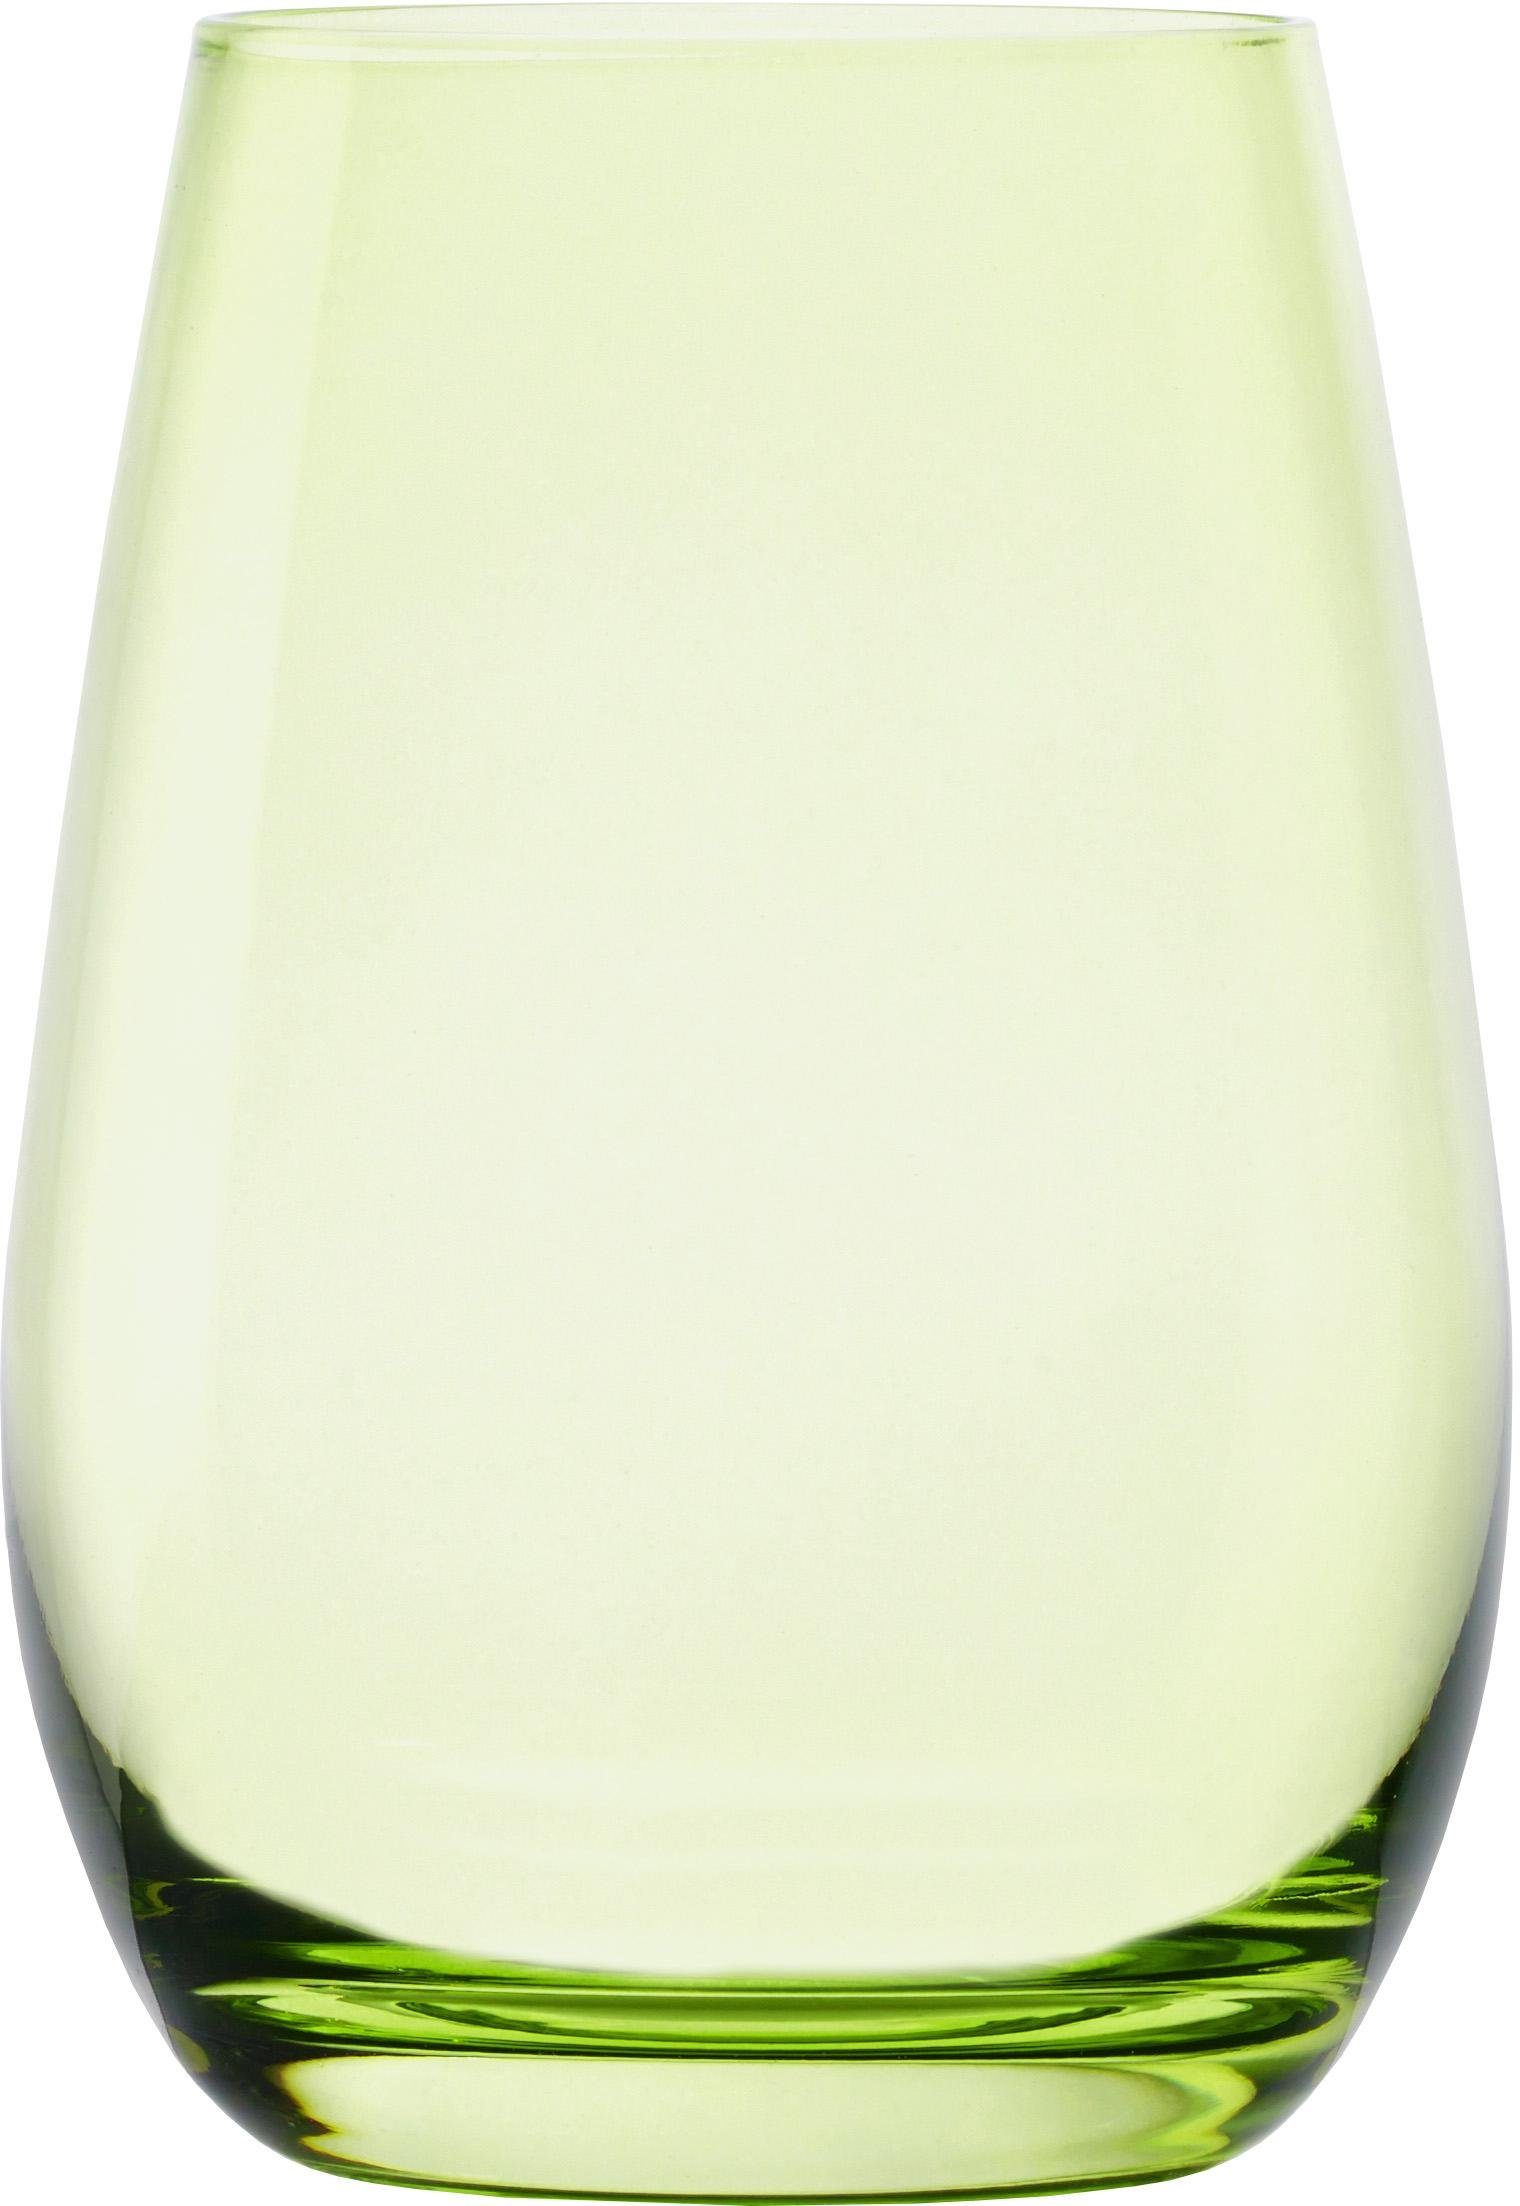 Stölzle Becher ELEMENTS, Glas, 6-teilig grün | Gläser